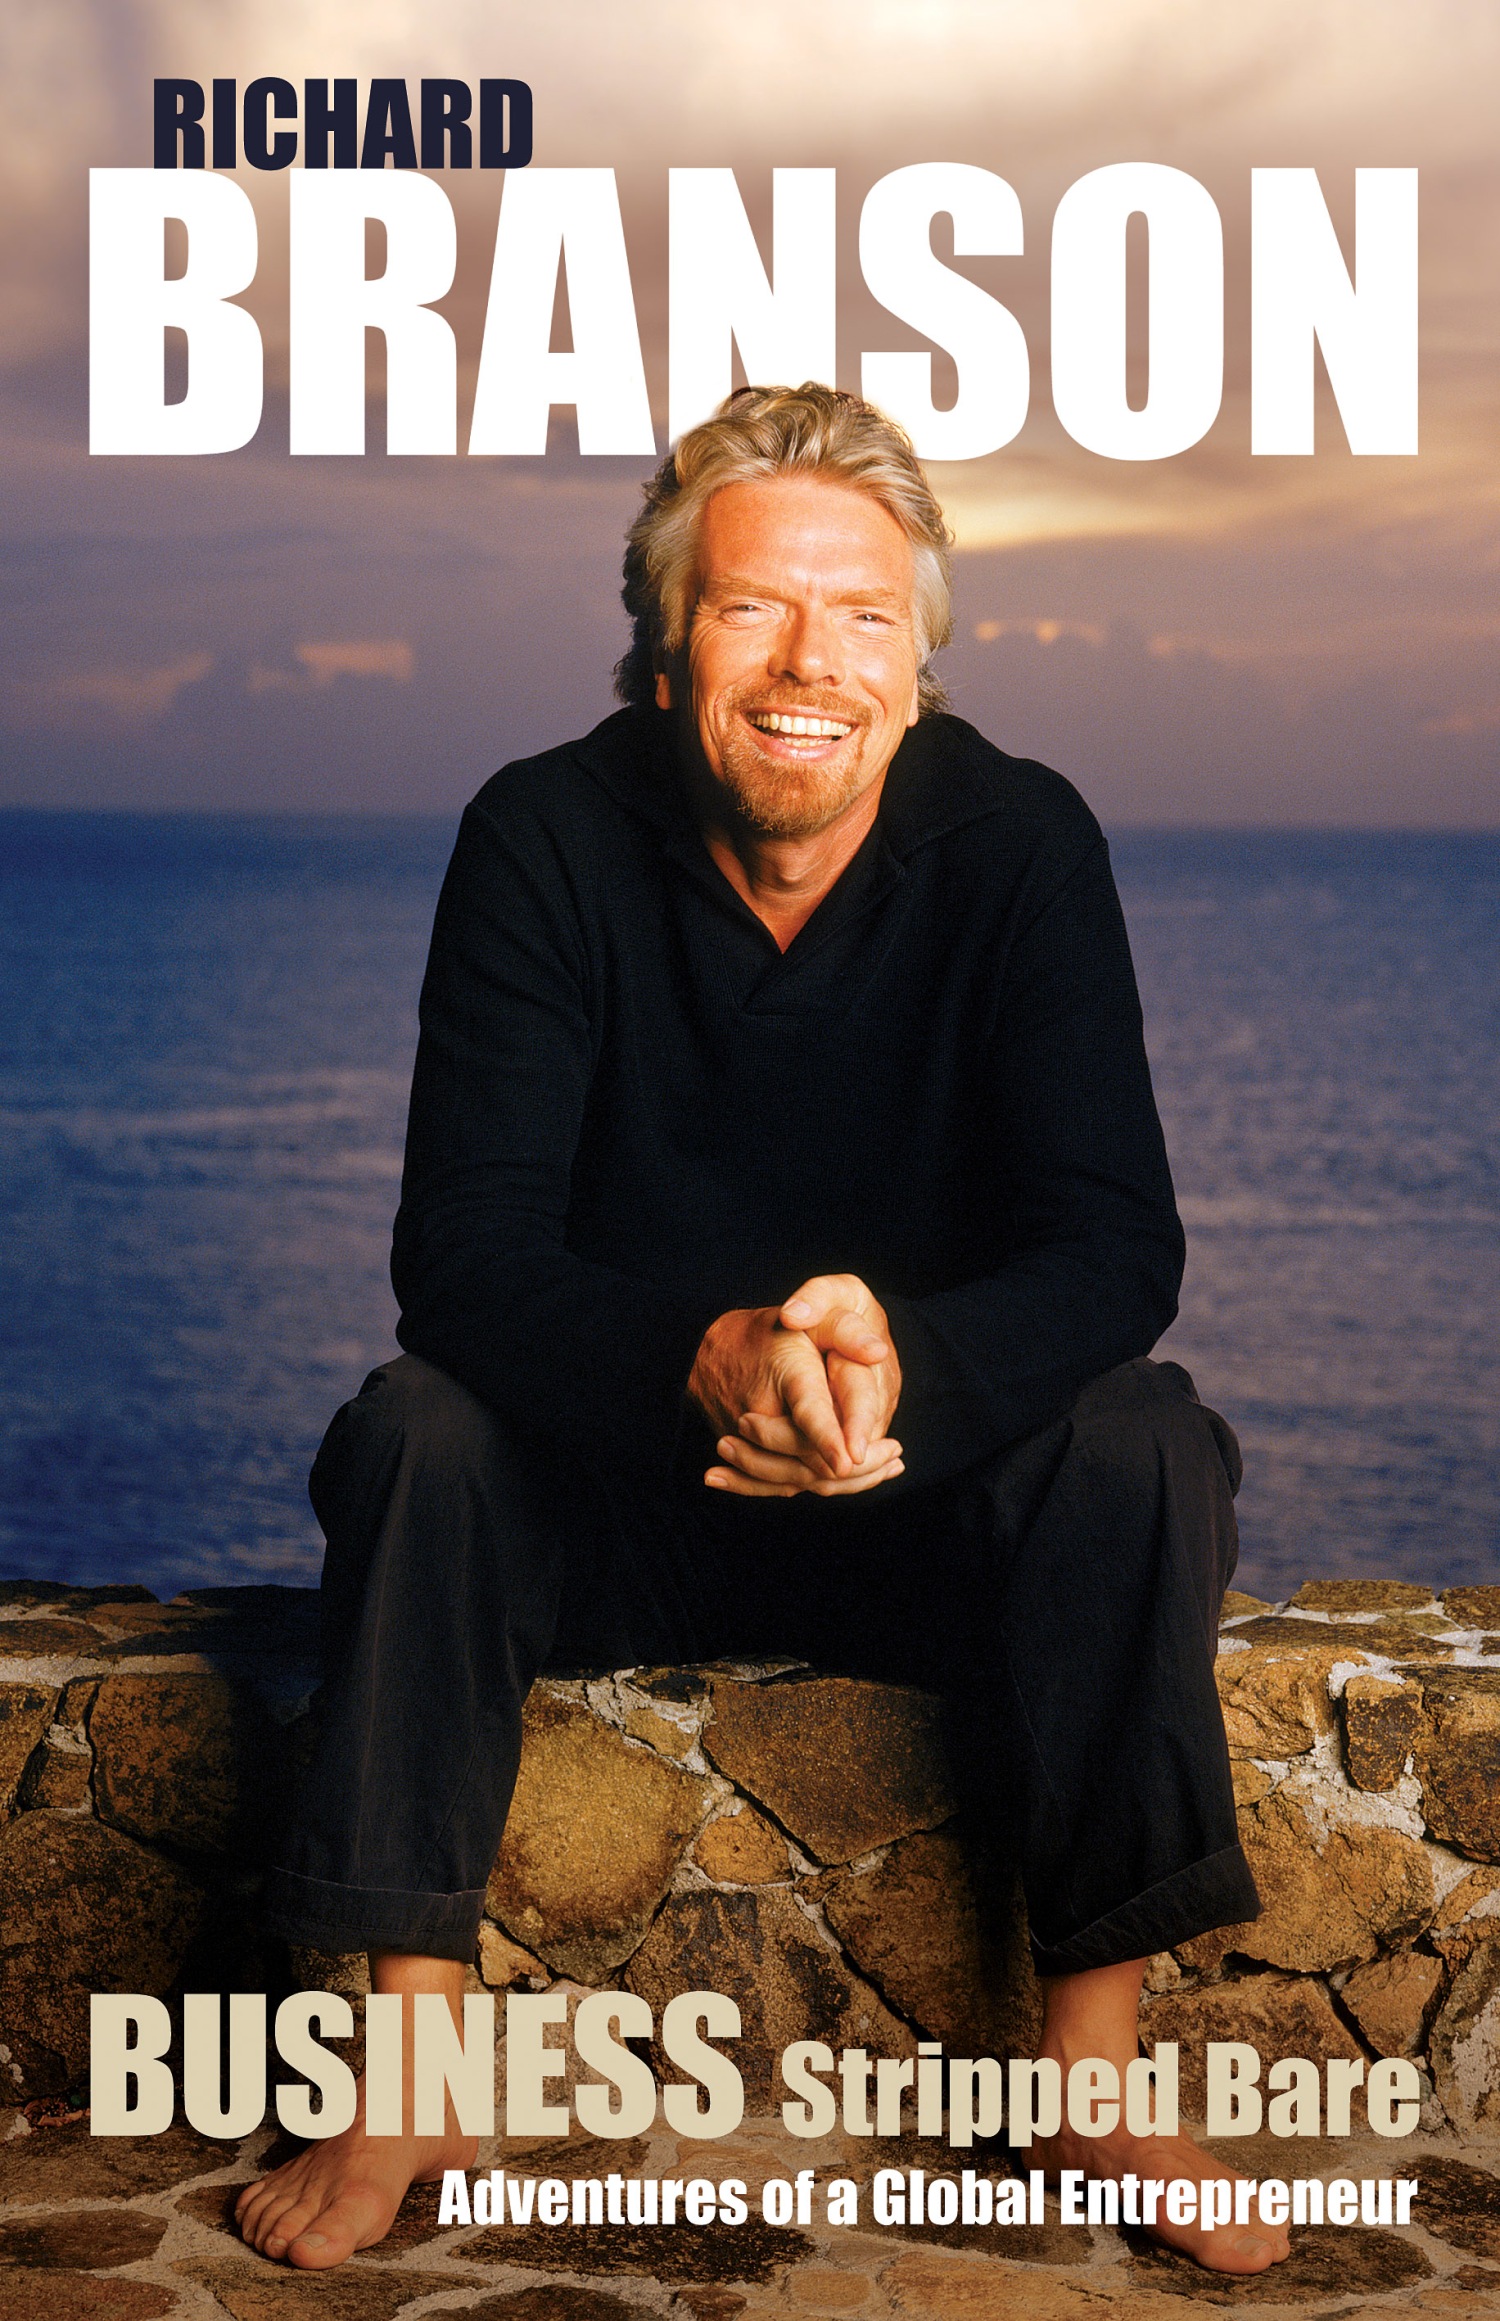 Richard Branson Biography: Entrepreneur of Space Tourism